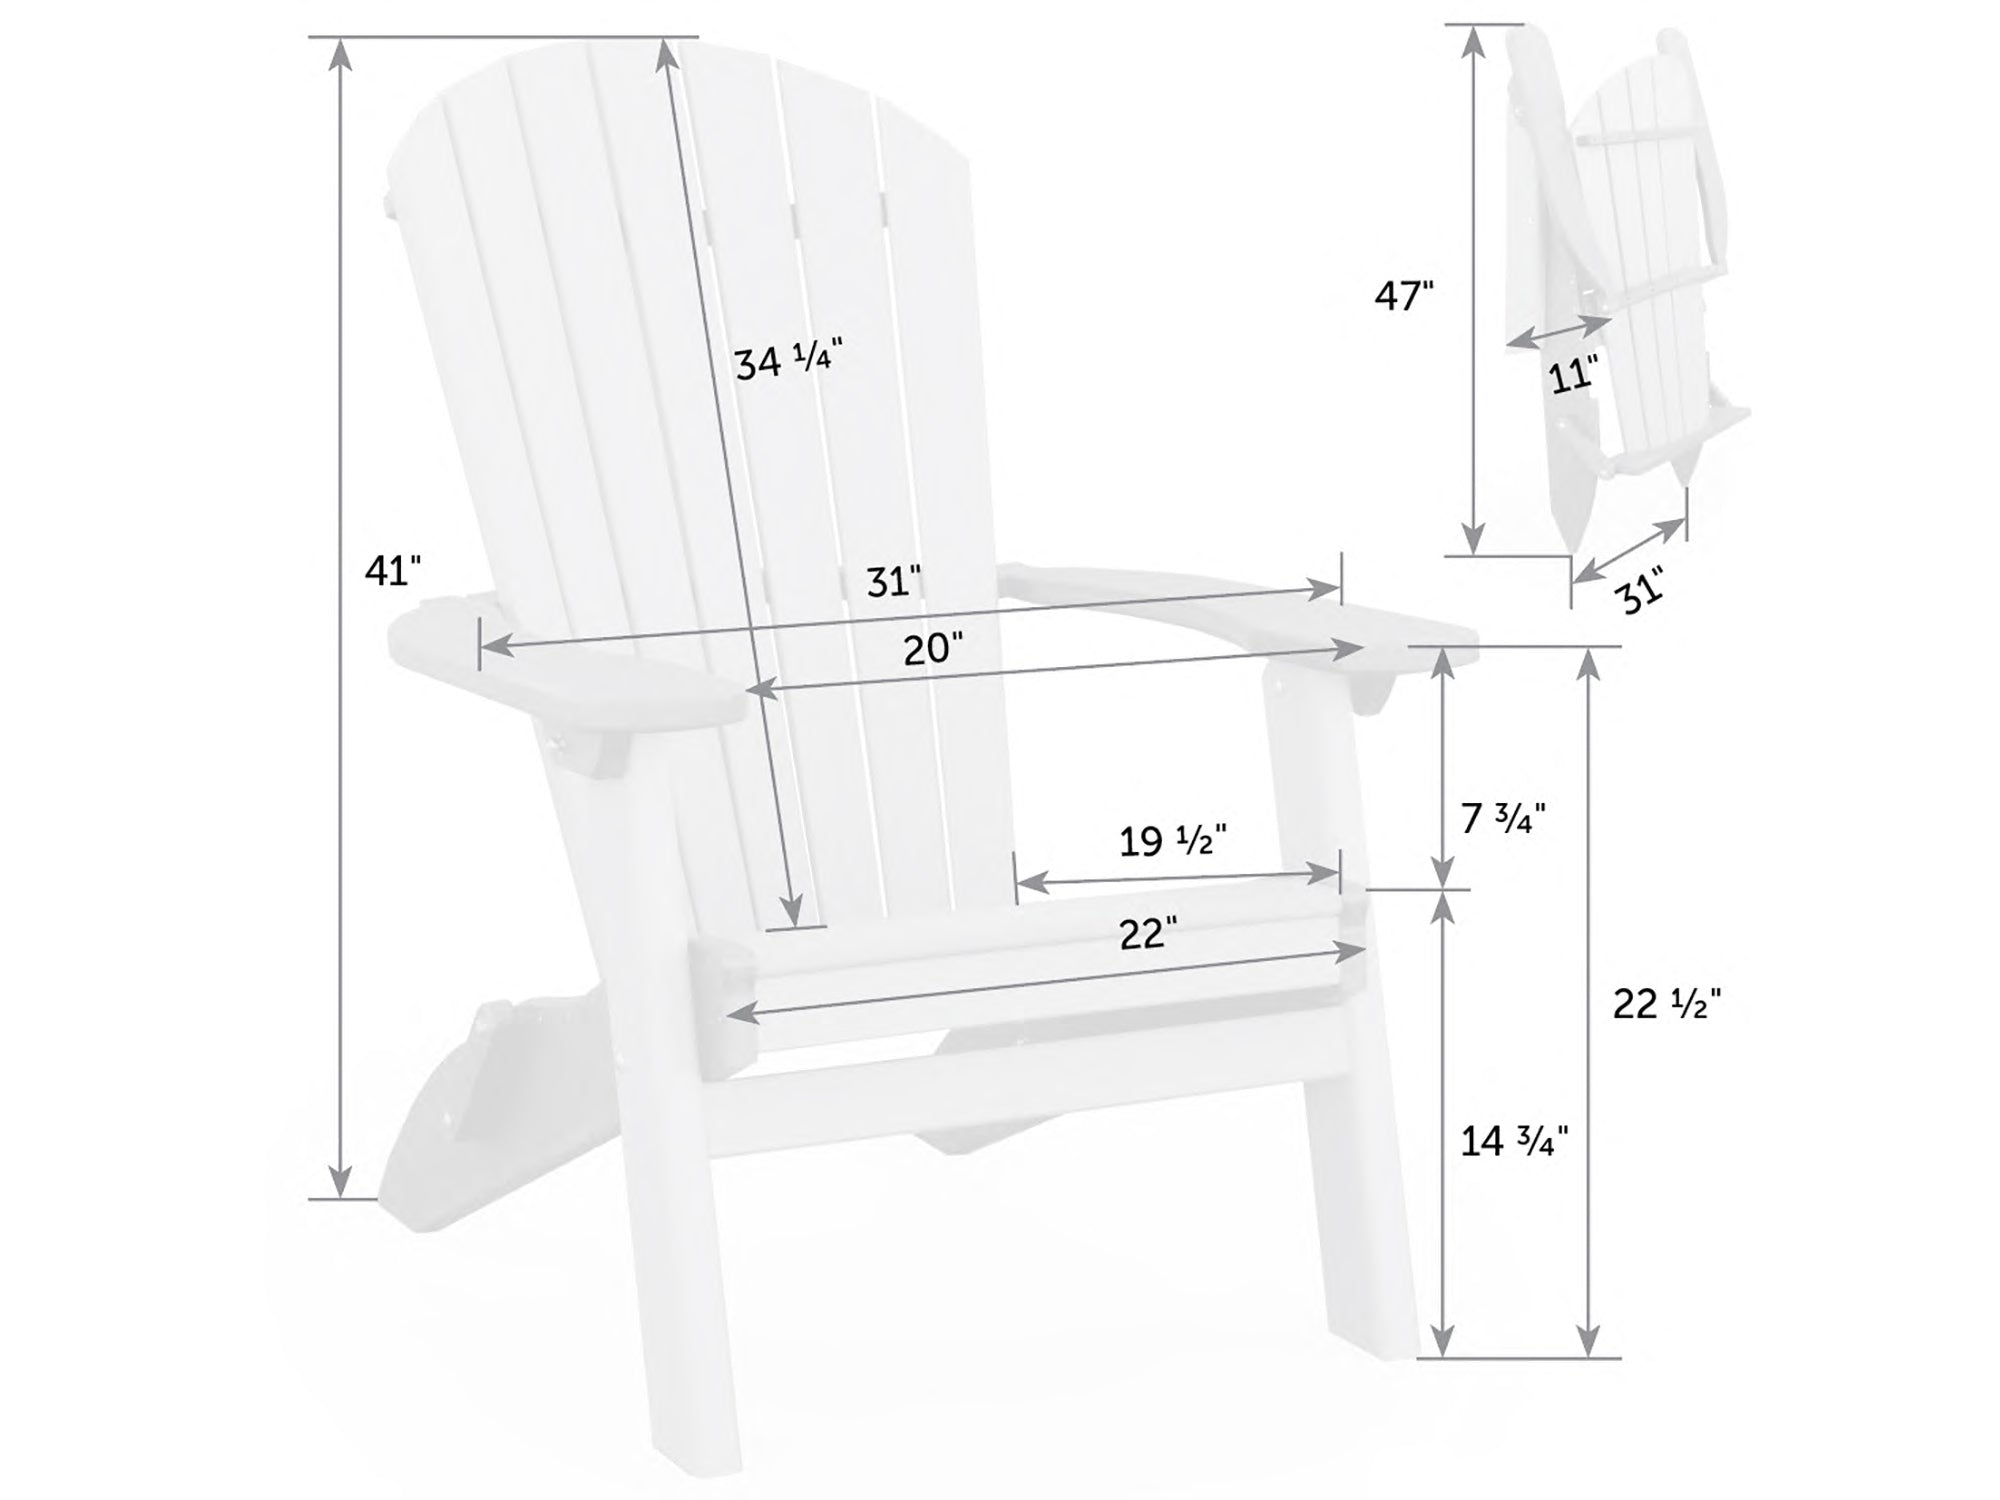 SeaAira Adirondack Folding Chair